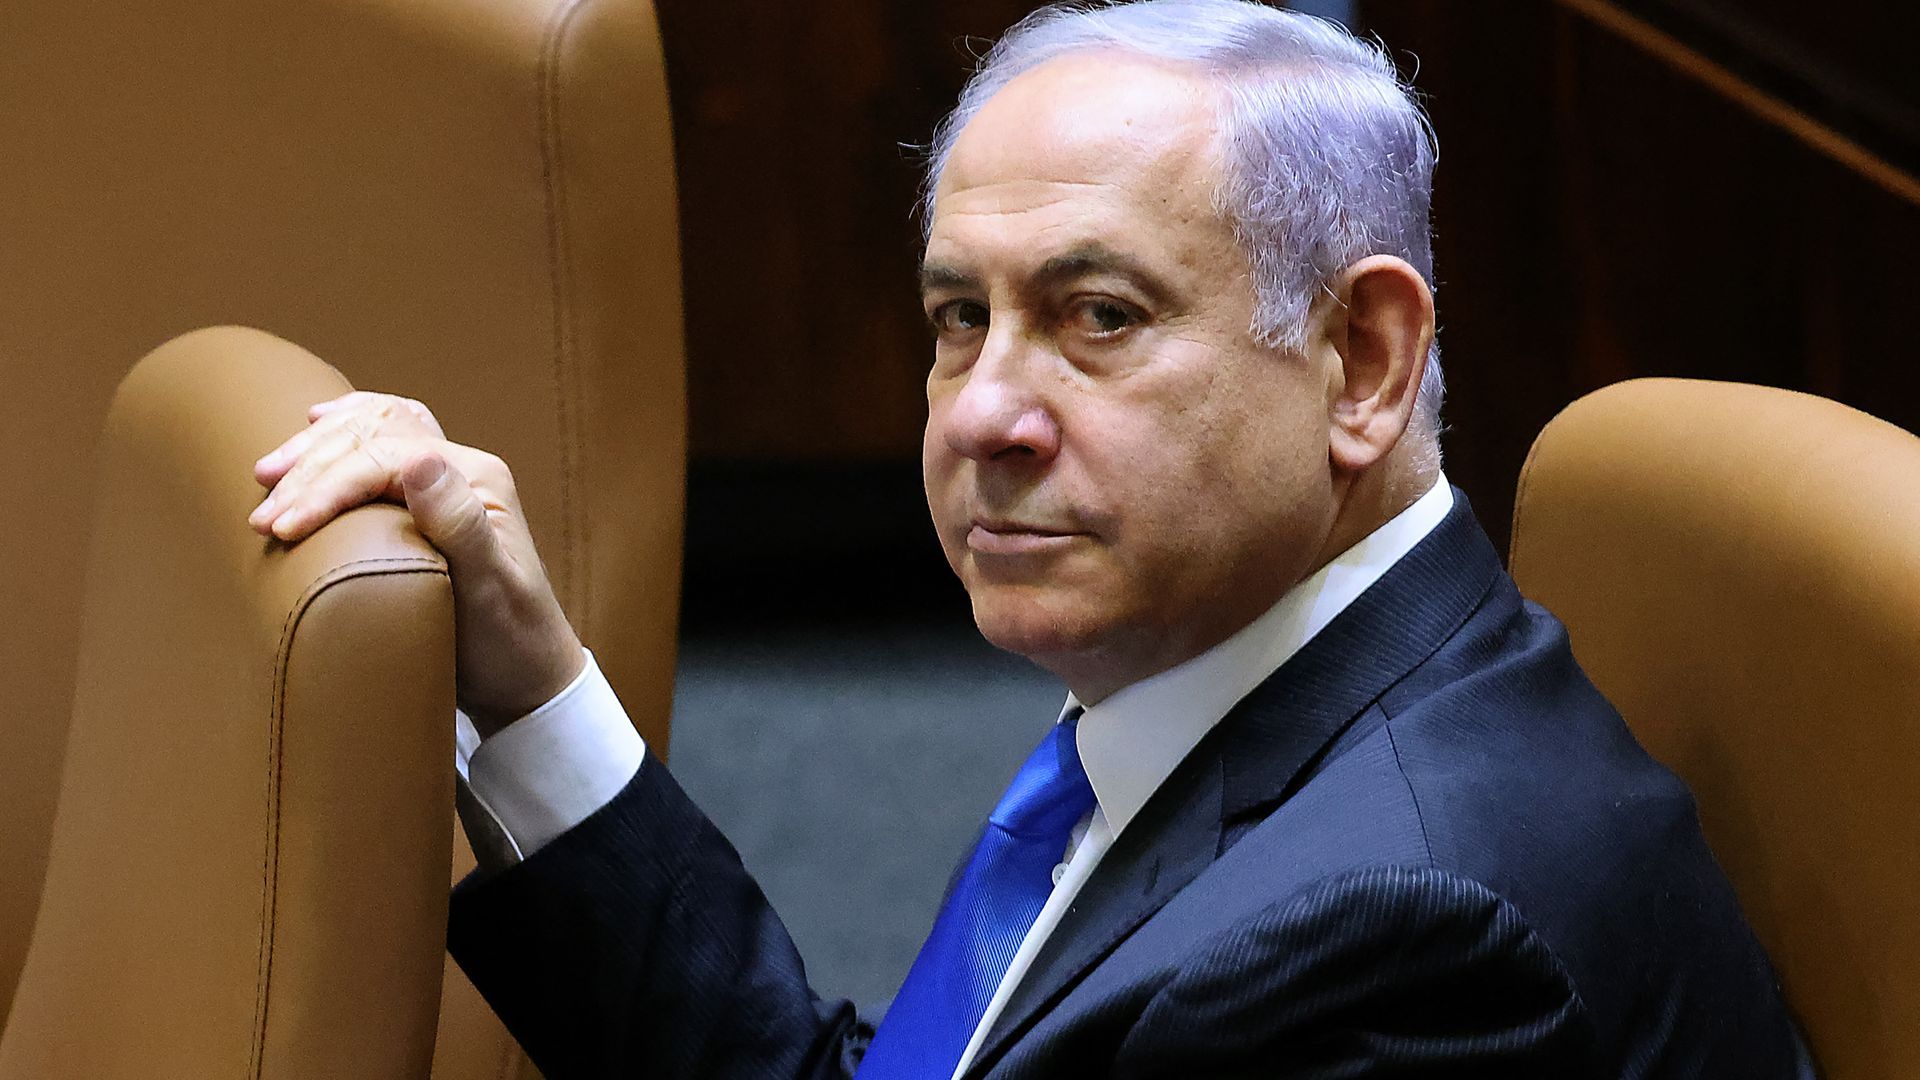 Netanyahu attends a Knesset session on June 13, 2021. Photo: Emmanuel Dunand/AFP via Getty Images